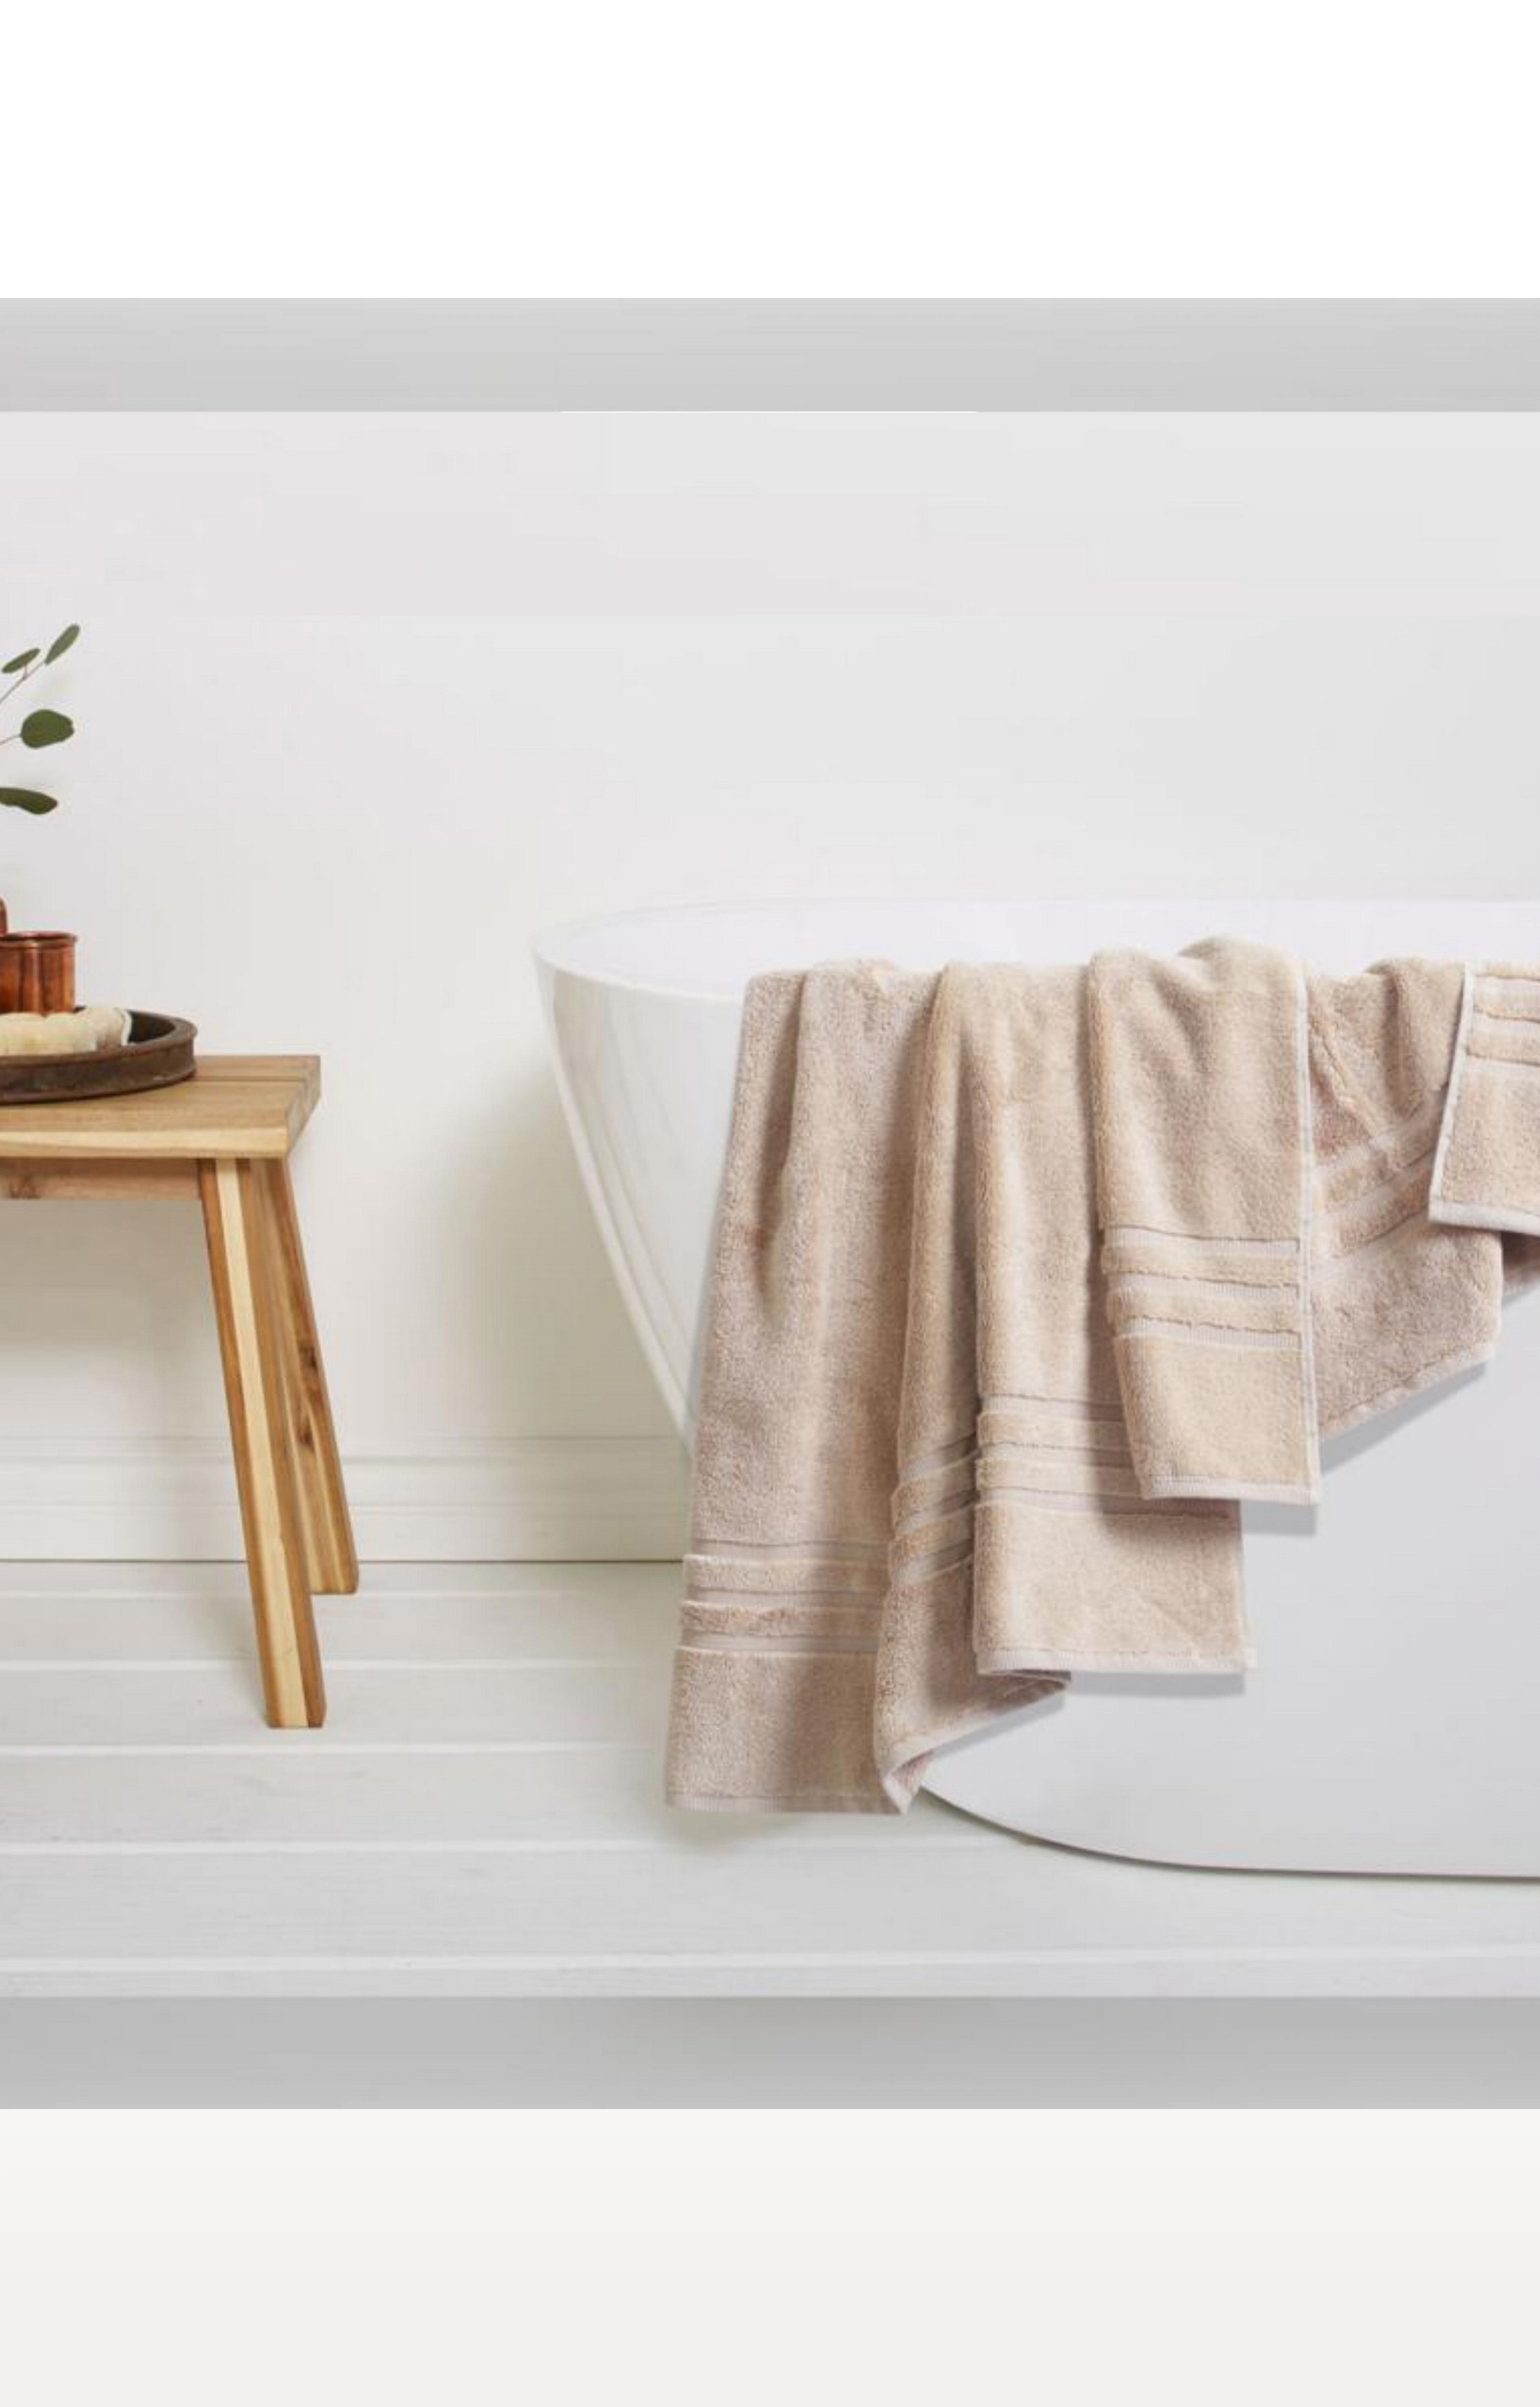 Sita Fabrics | Sita Fabrics Premium Cotton Super Soft Zero Twist Yarn Very Airy 600 GSM Bath Towel - Beige 0